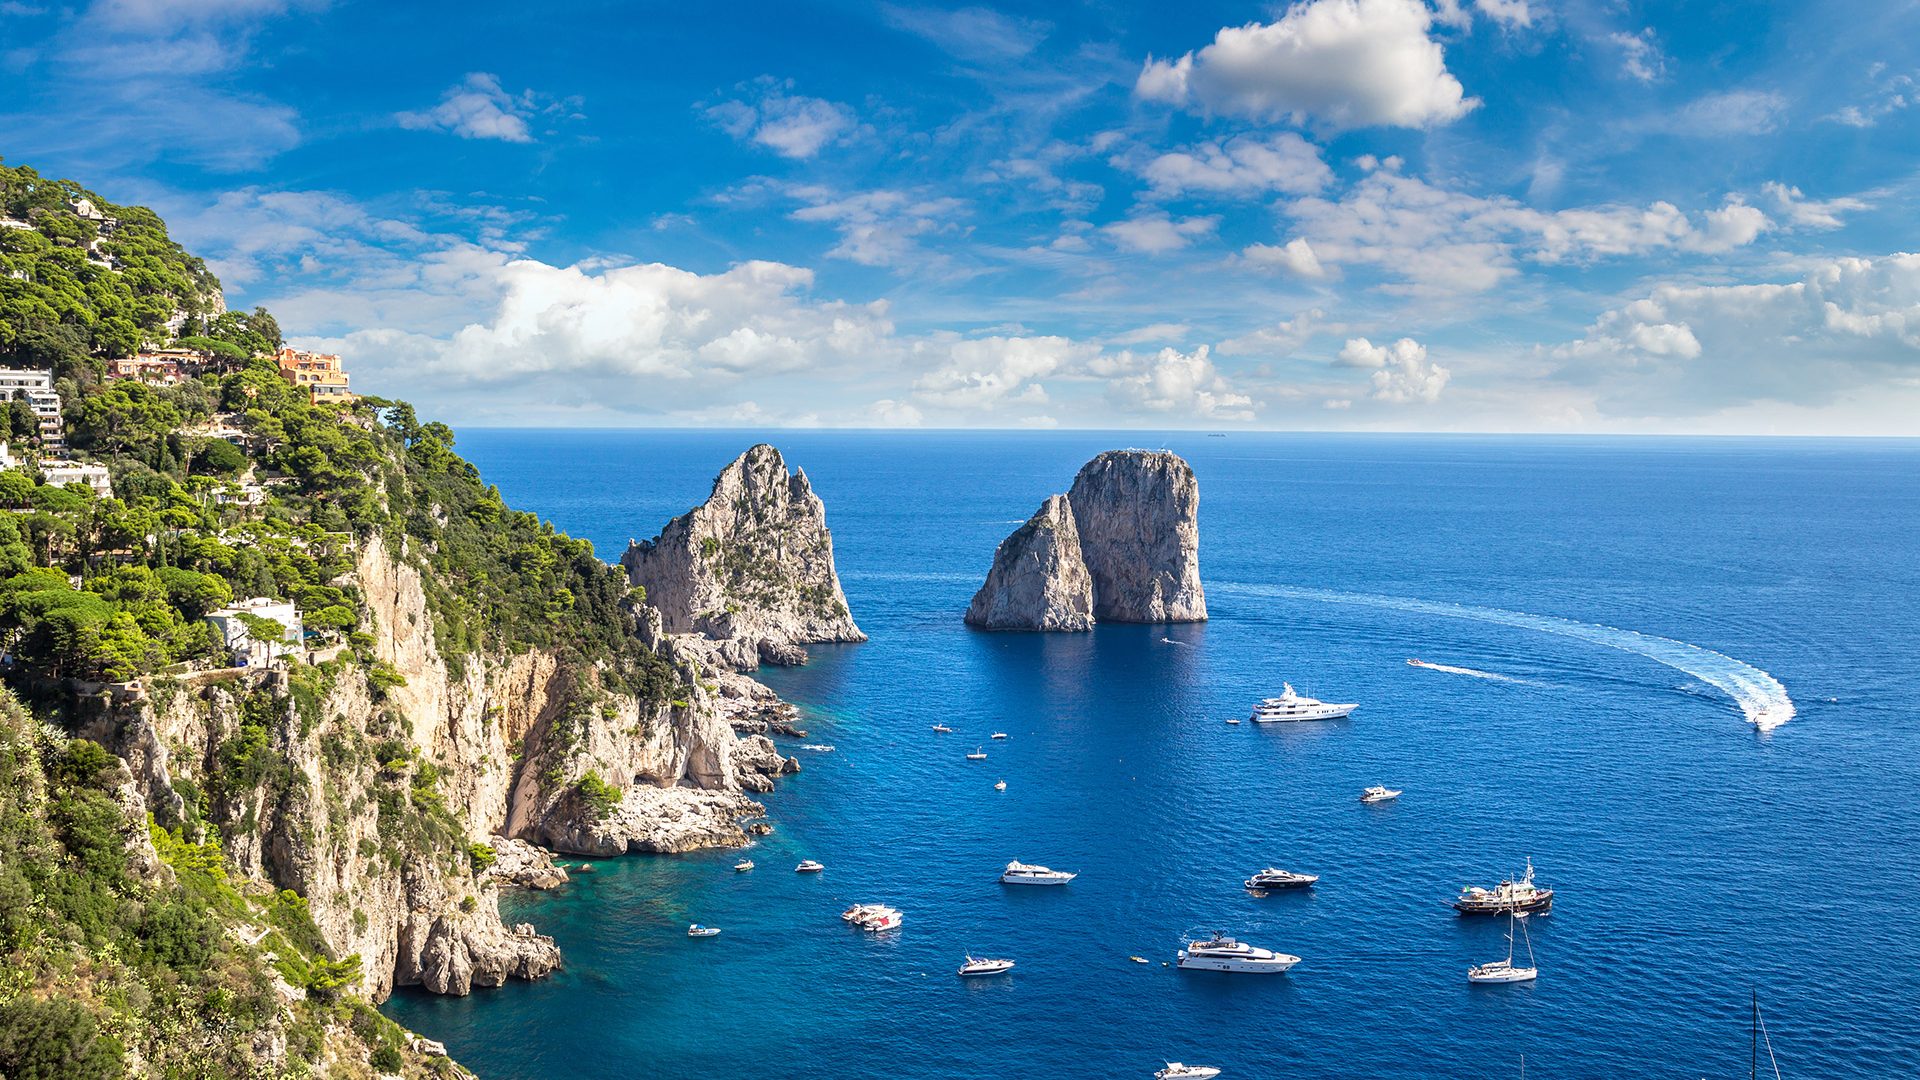 BOATS RENTAL & TOURS
Capri - Sorrento - Amalfi